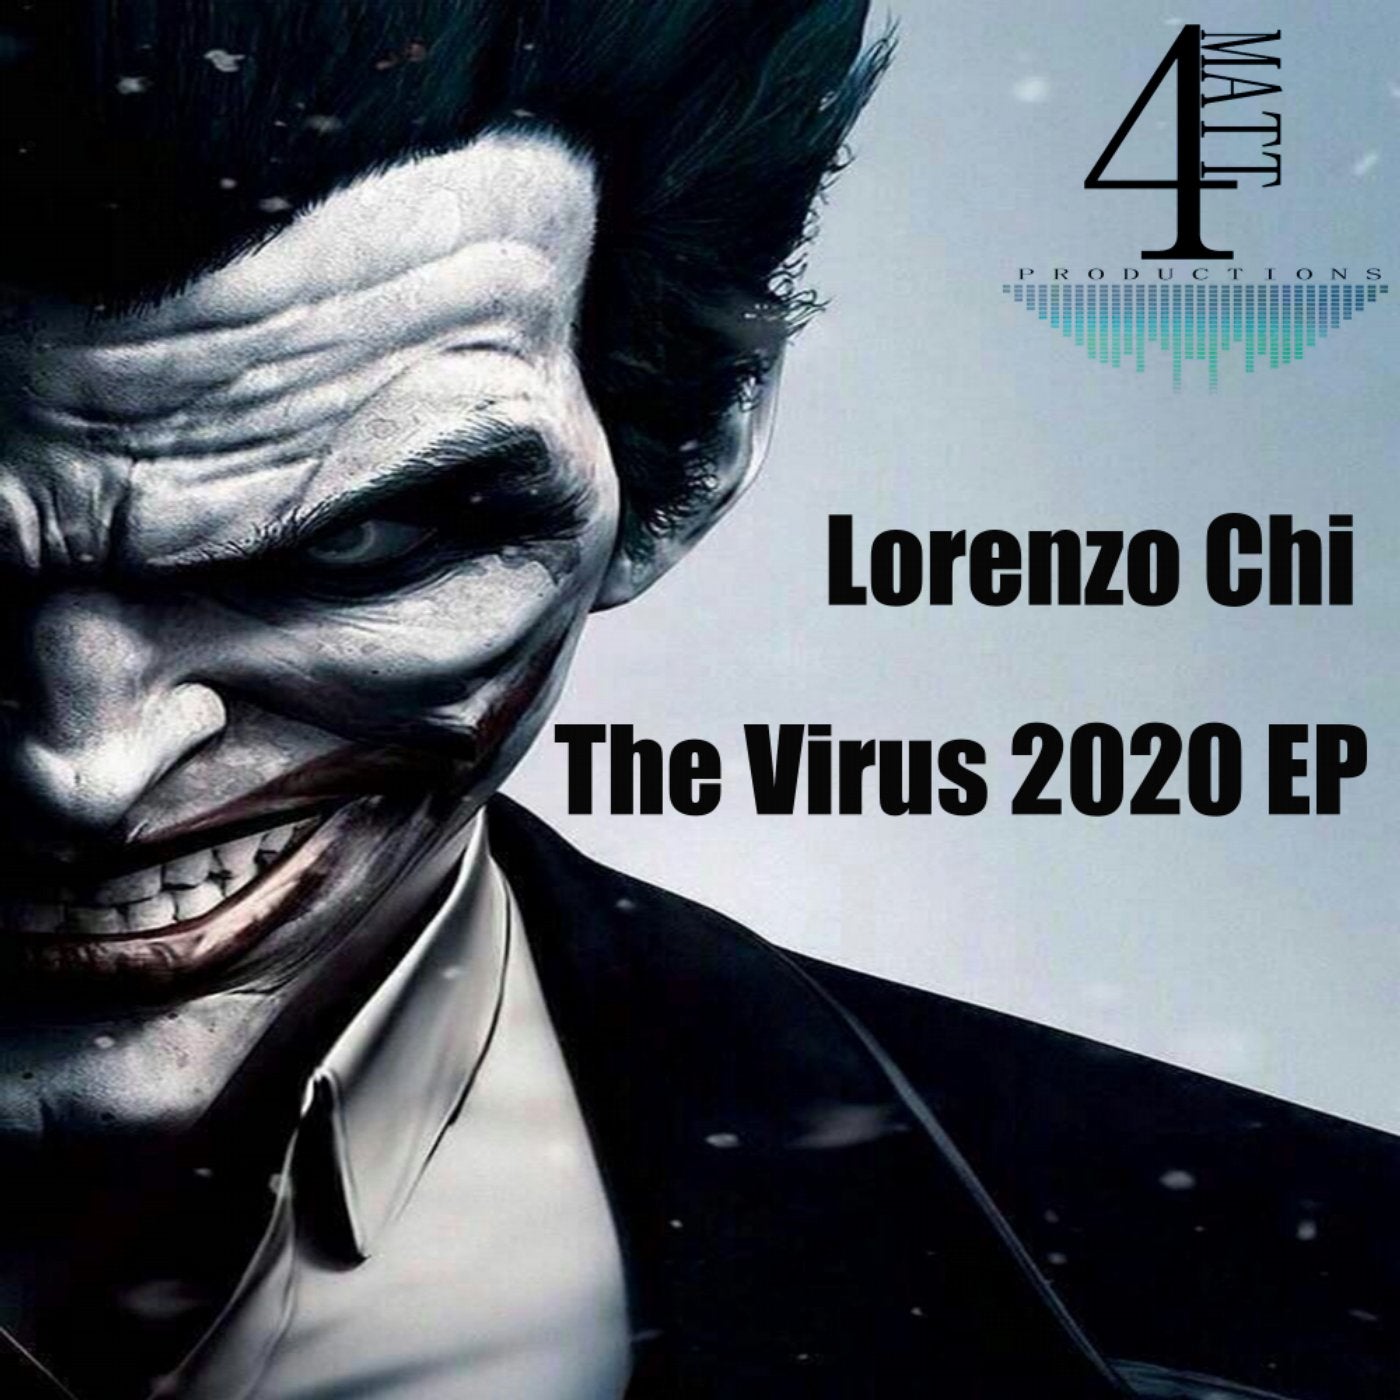 The Virus 2020 EP